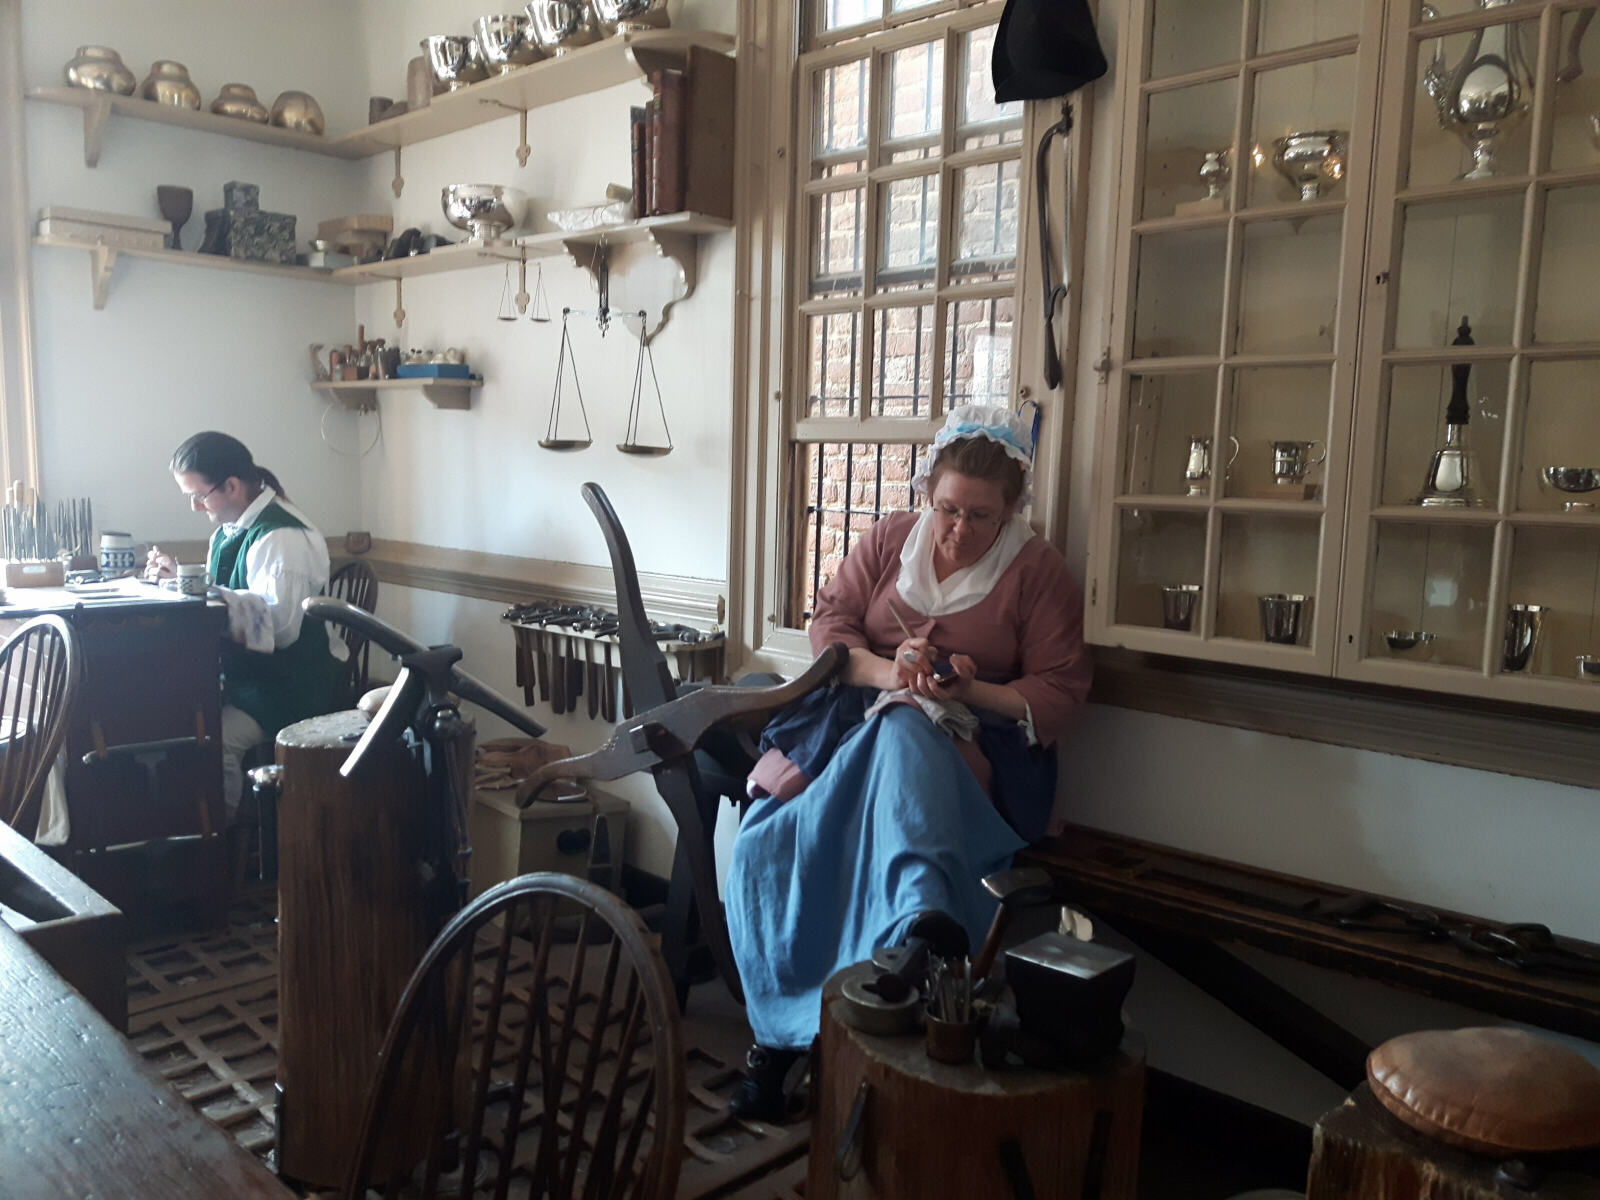 The silversmith in Colonial Williamsburg, Virginia